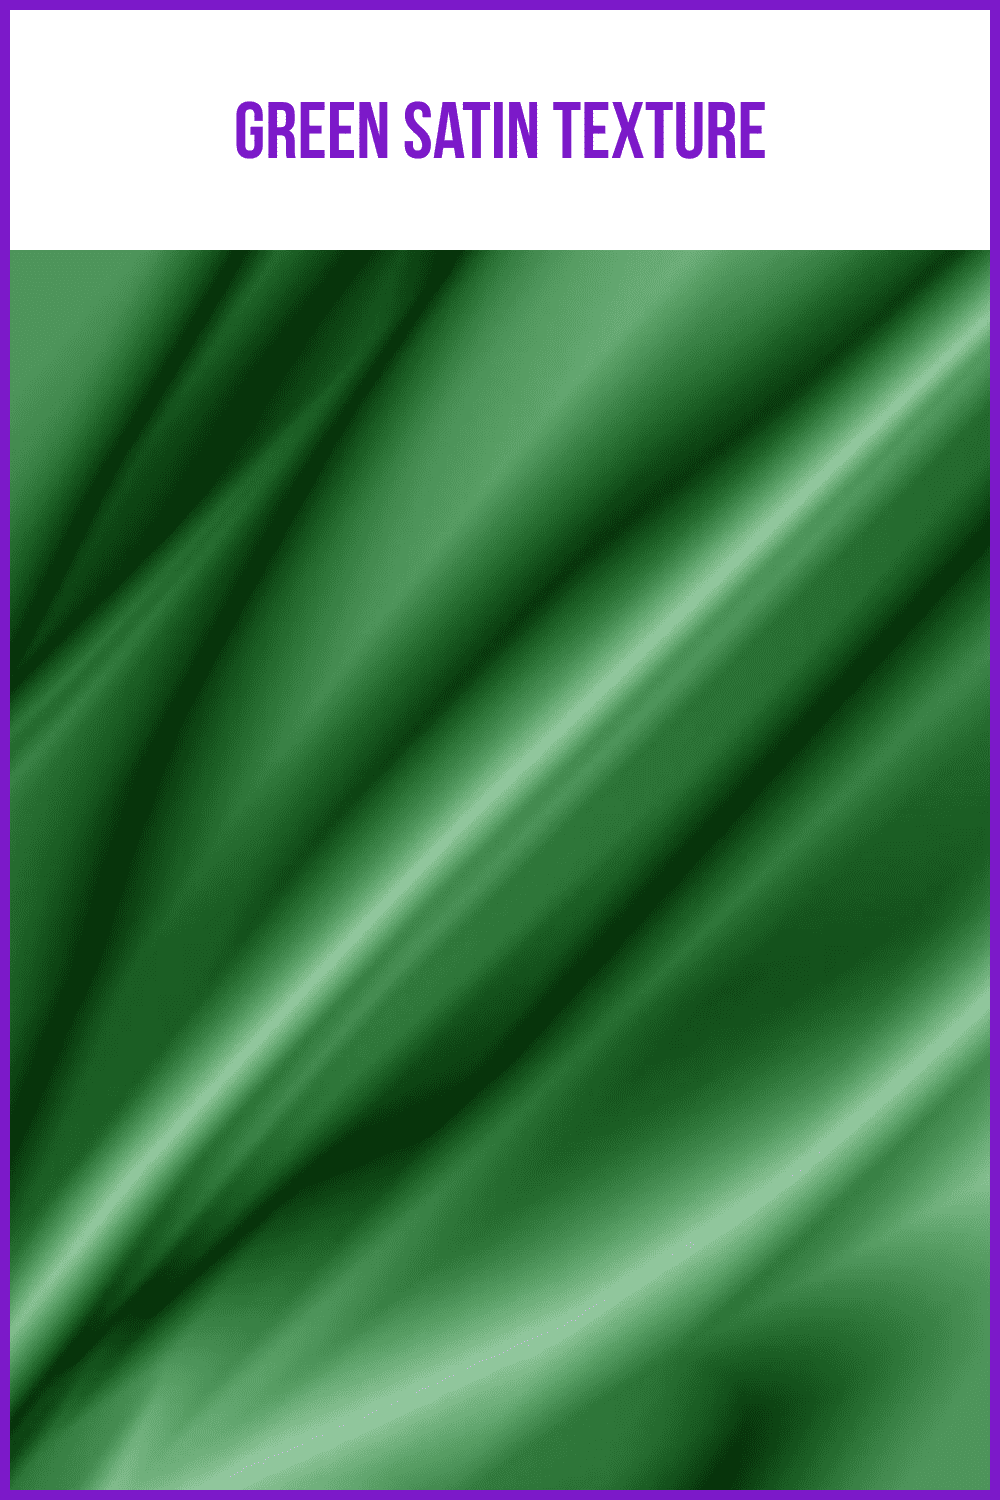 Green Satin Texture.